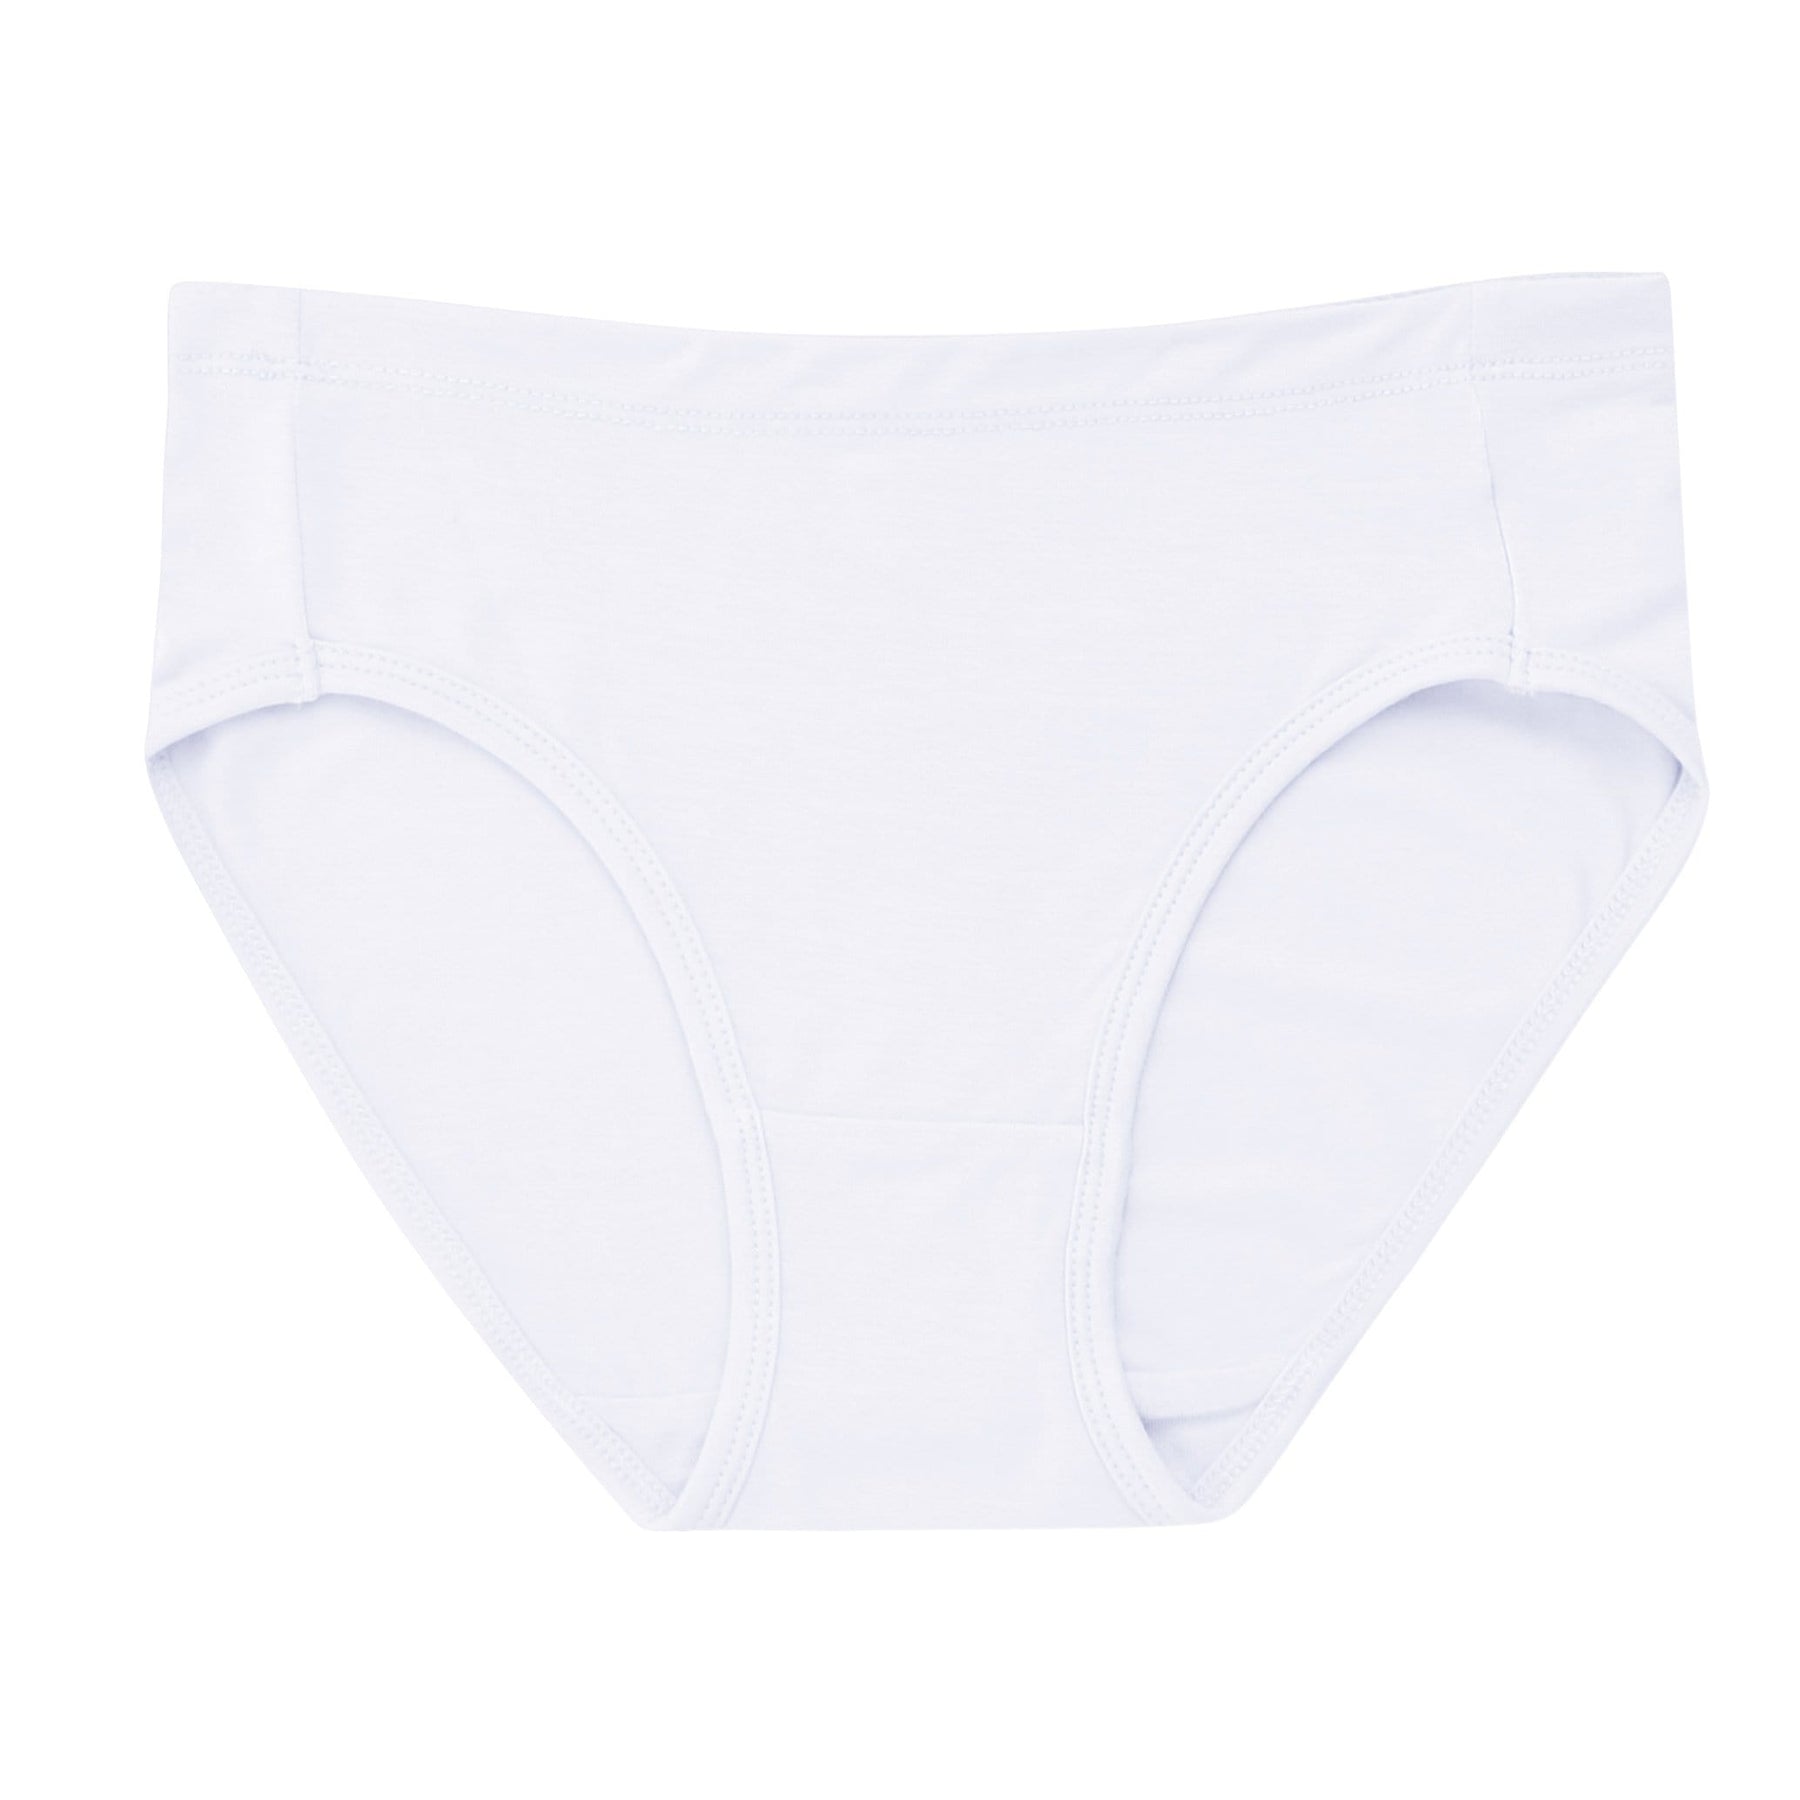 Buy ALAXENDER Women Underwear Cotton Full Coverage Panties Pack